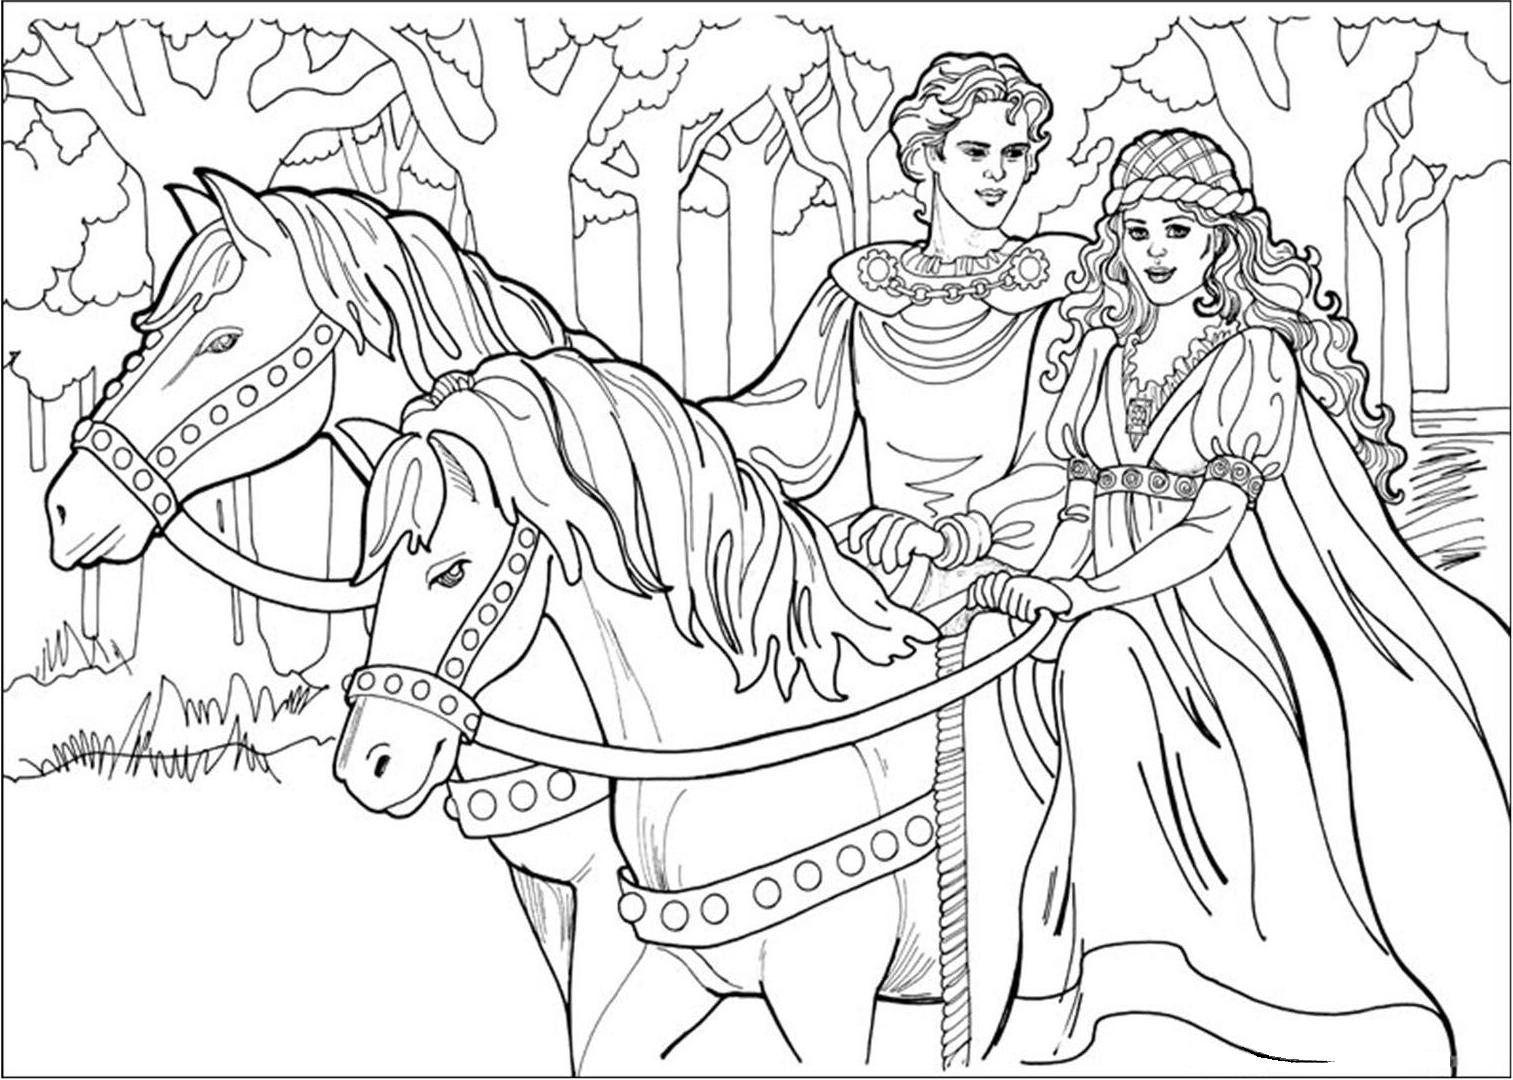 Príncipe y princesa a caballo